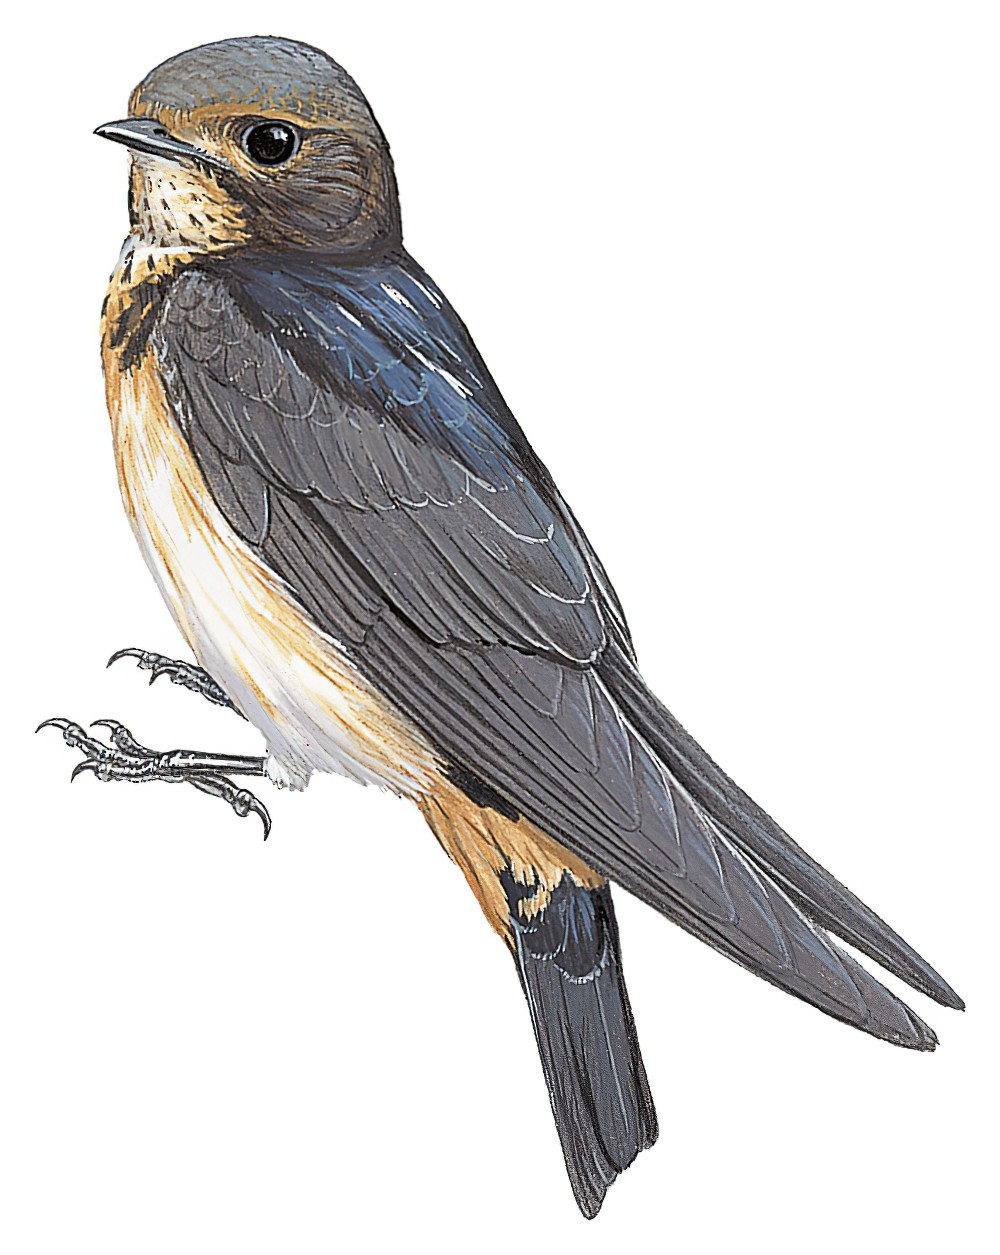 South African Swallow / Petrochelidon spilodera